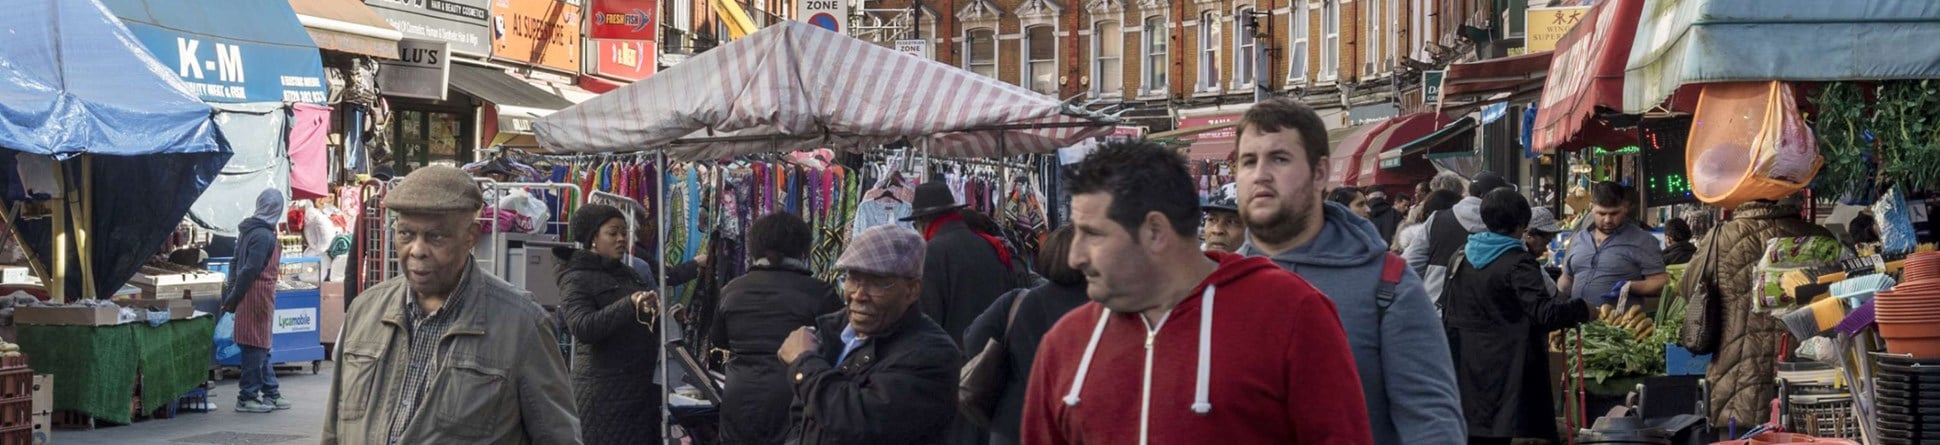 Street scene of Electric Avenue, Brixton on market day